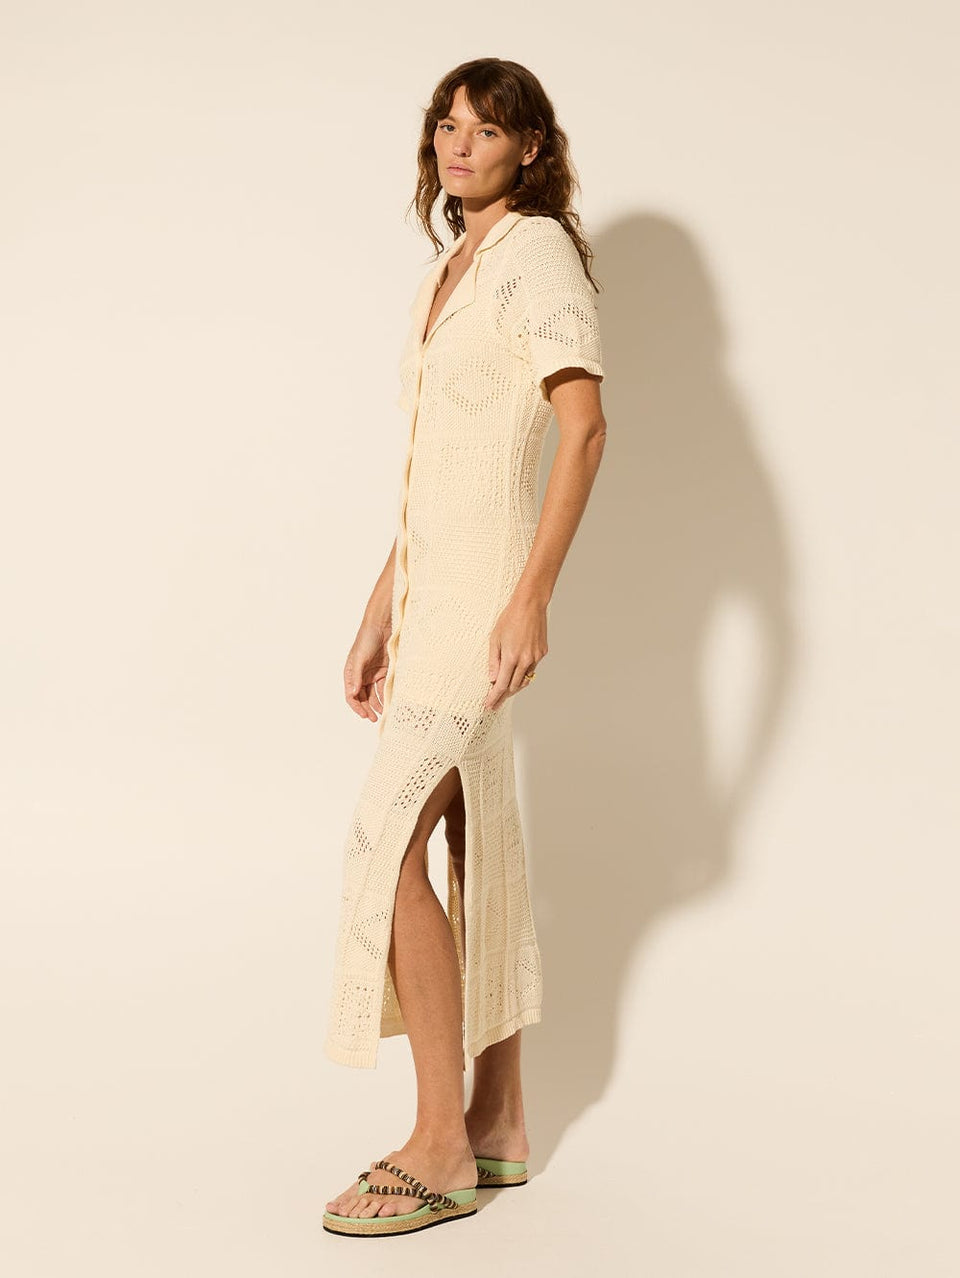 Clementine Collared Midi Dress Cream KIVARI | Model wears cream knit midi dress side view